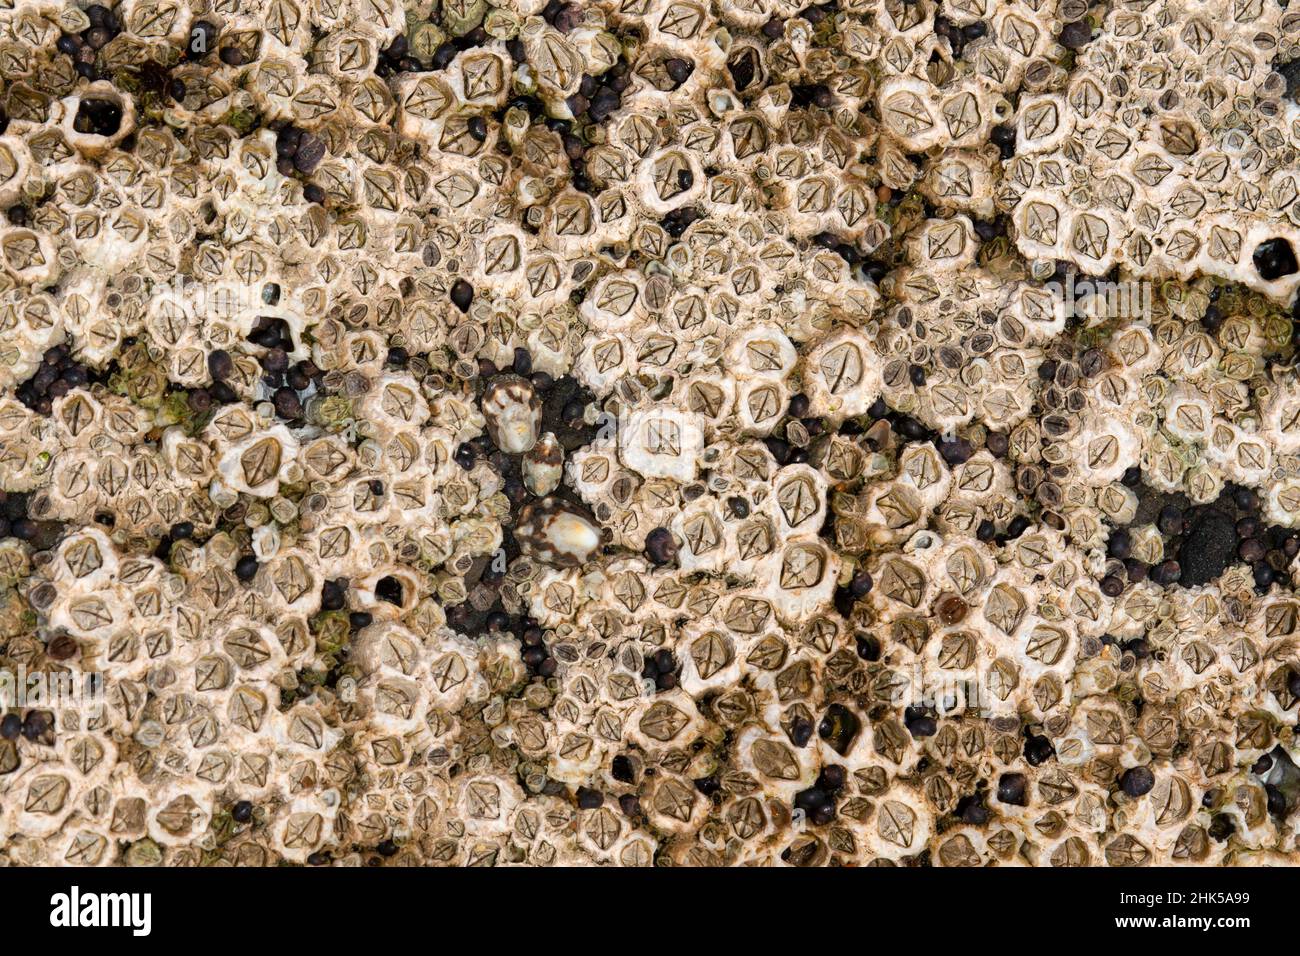 Acorn barnacles, Fogarty Creek State Park, Lincoln City, Oregon Stock Photo